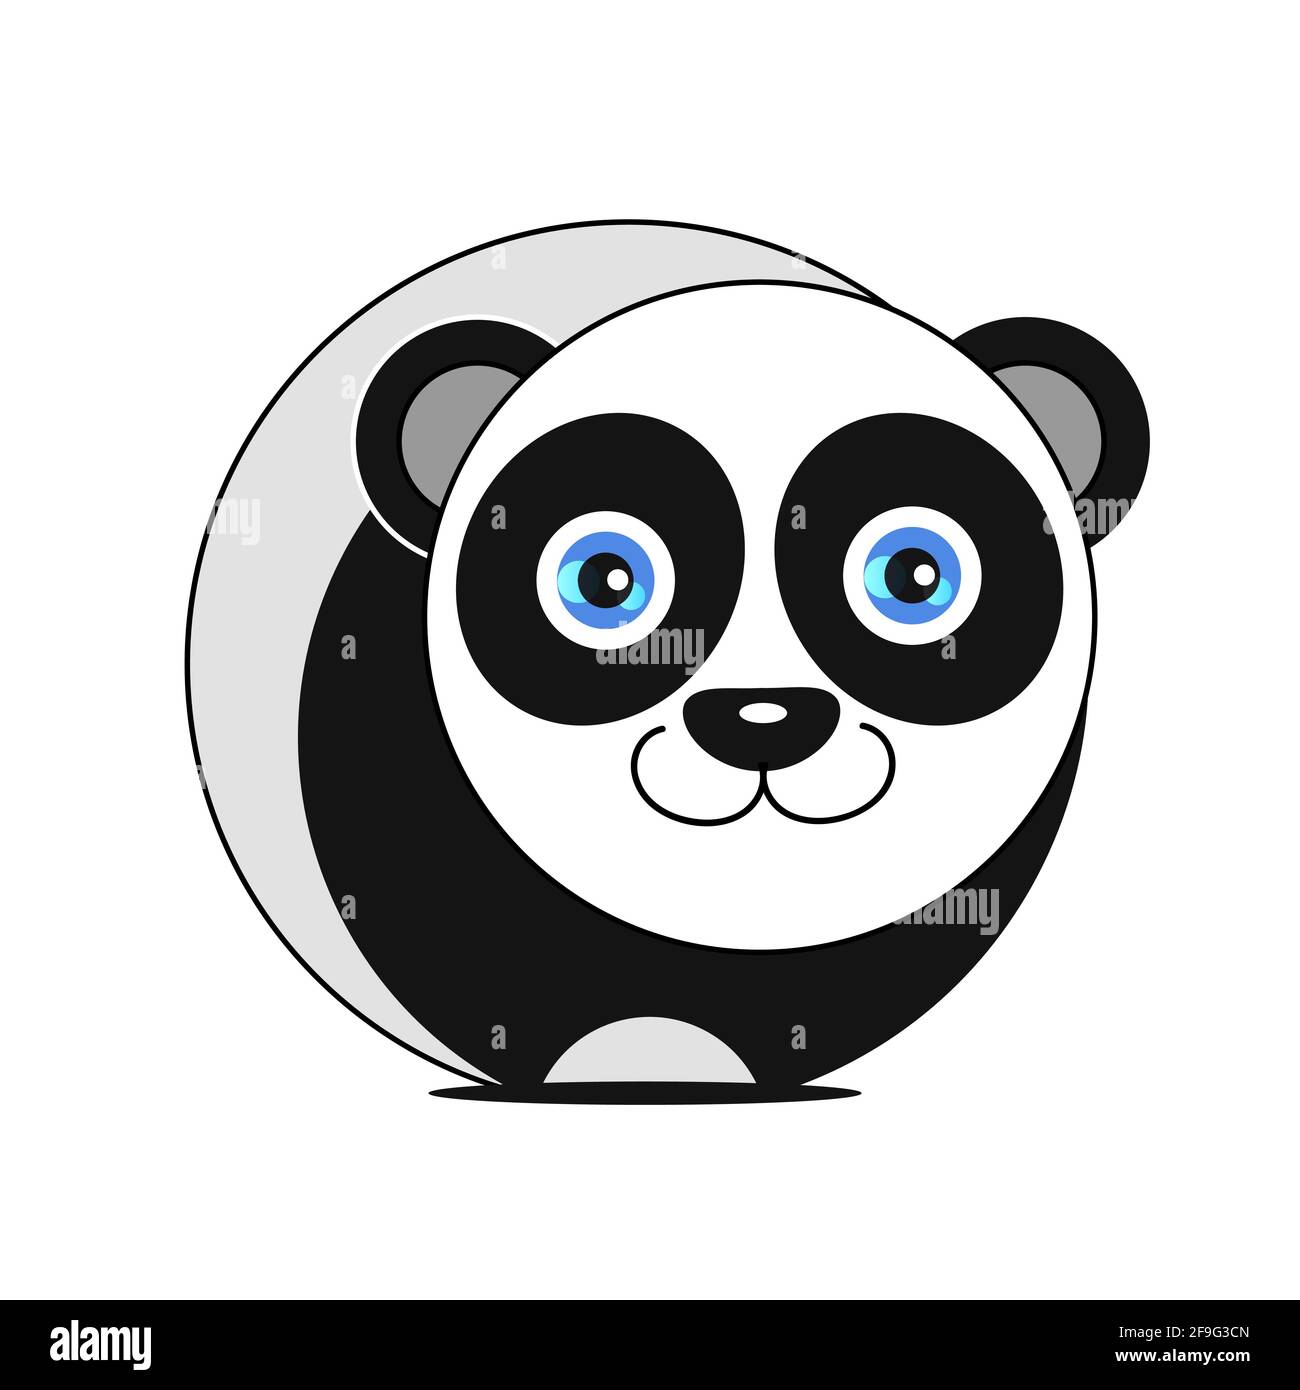 hello panda logo